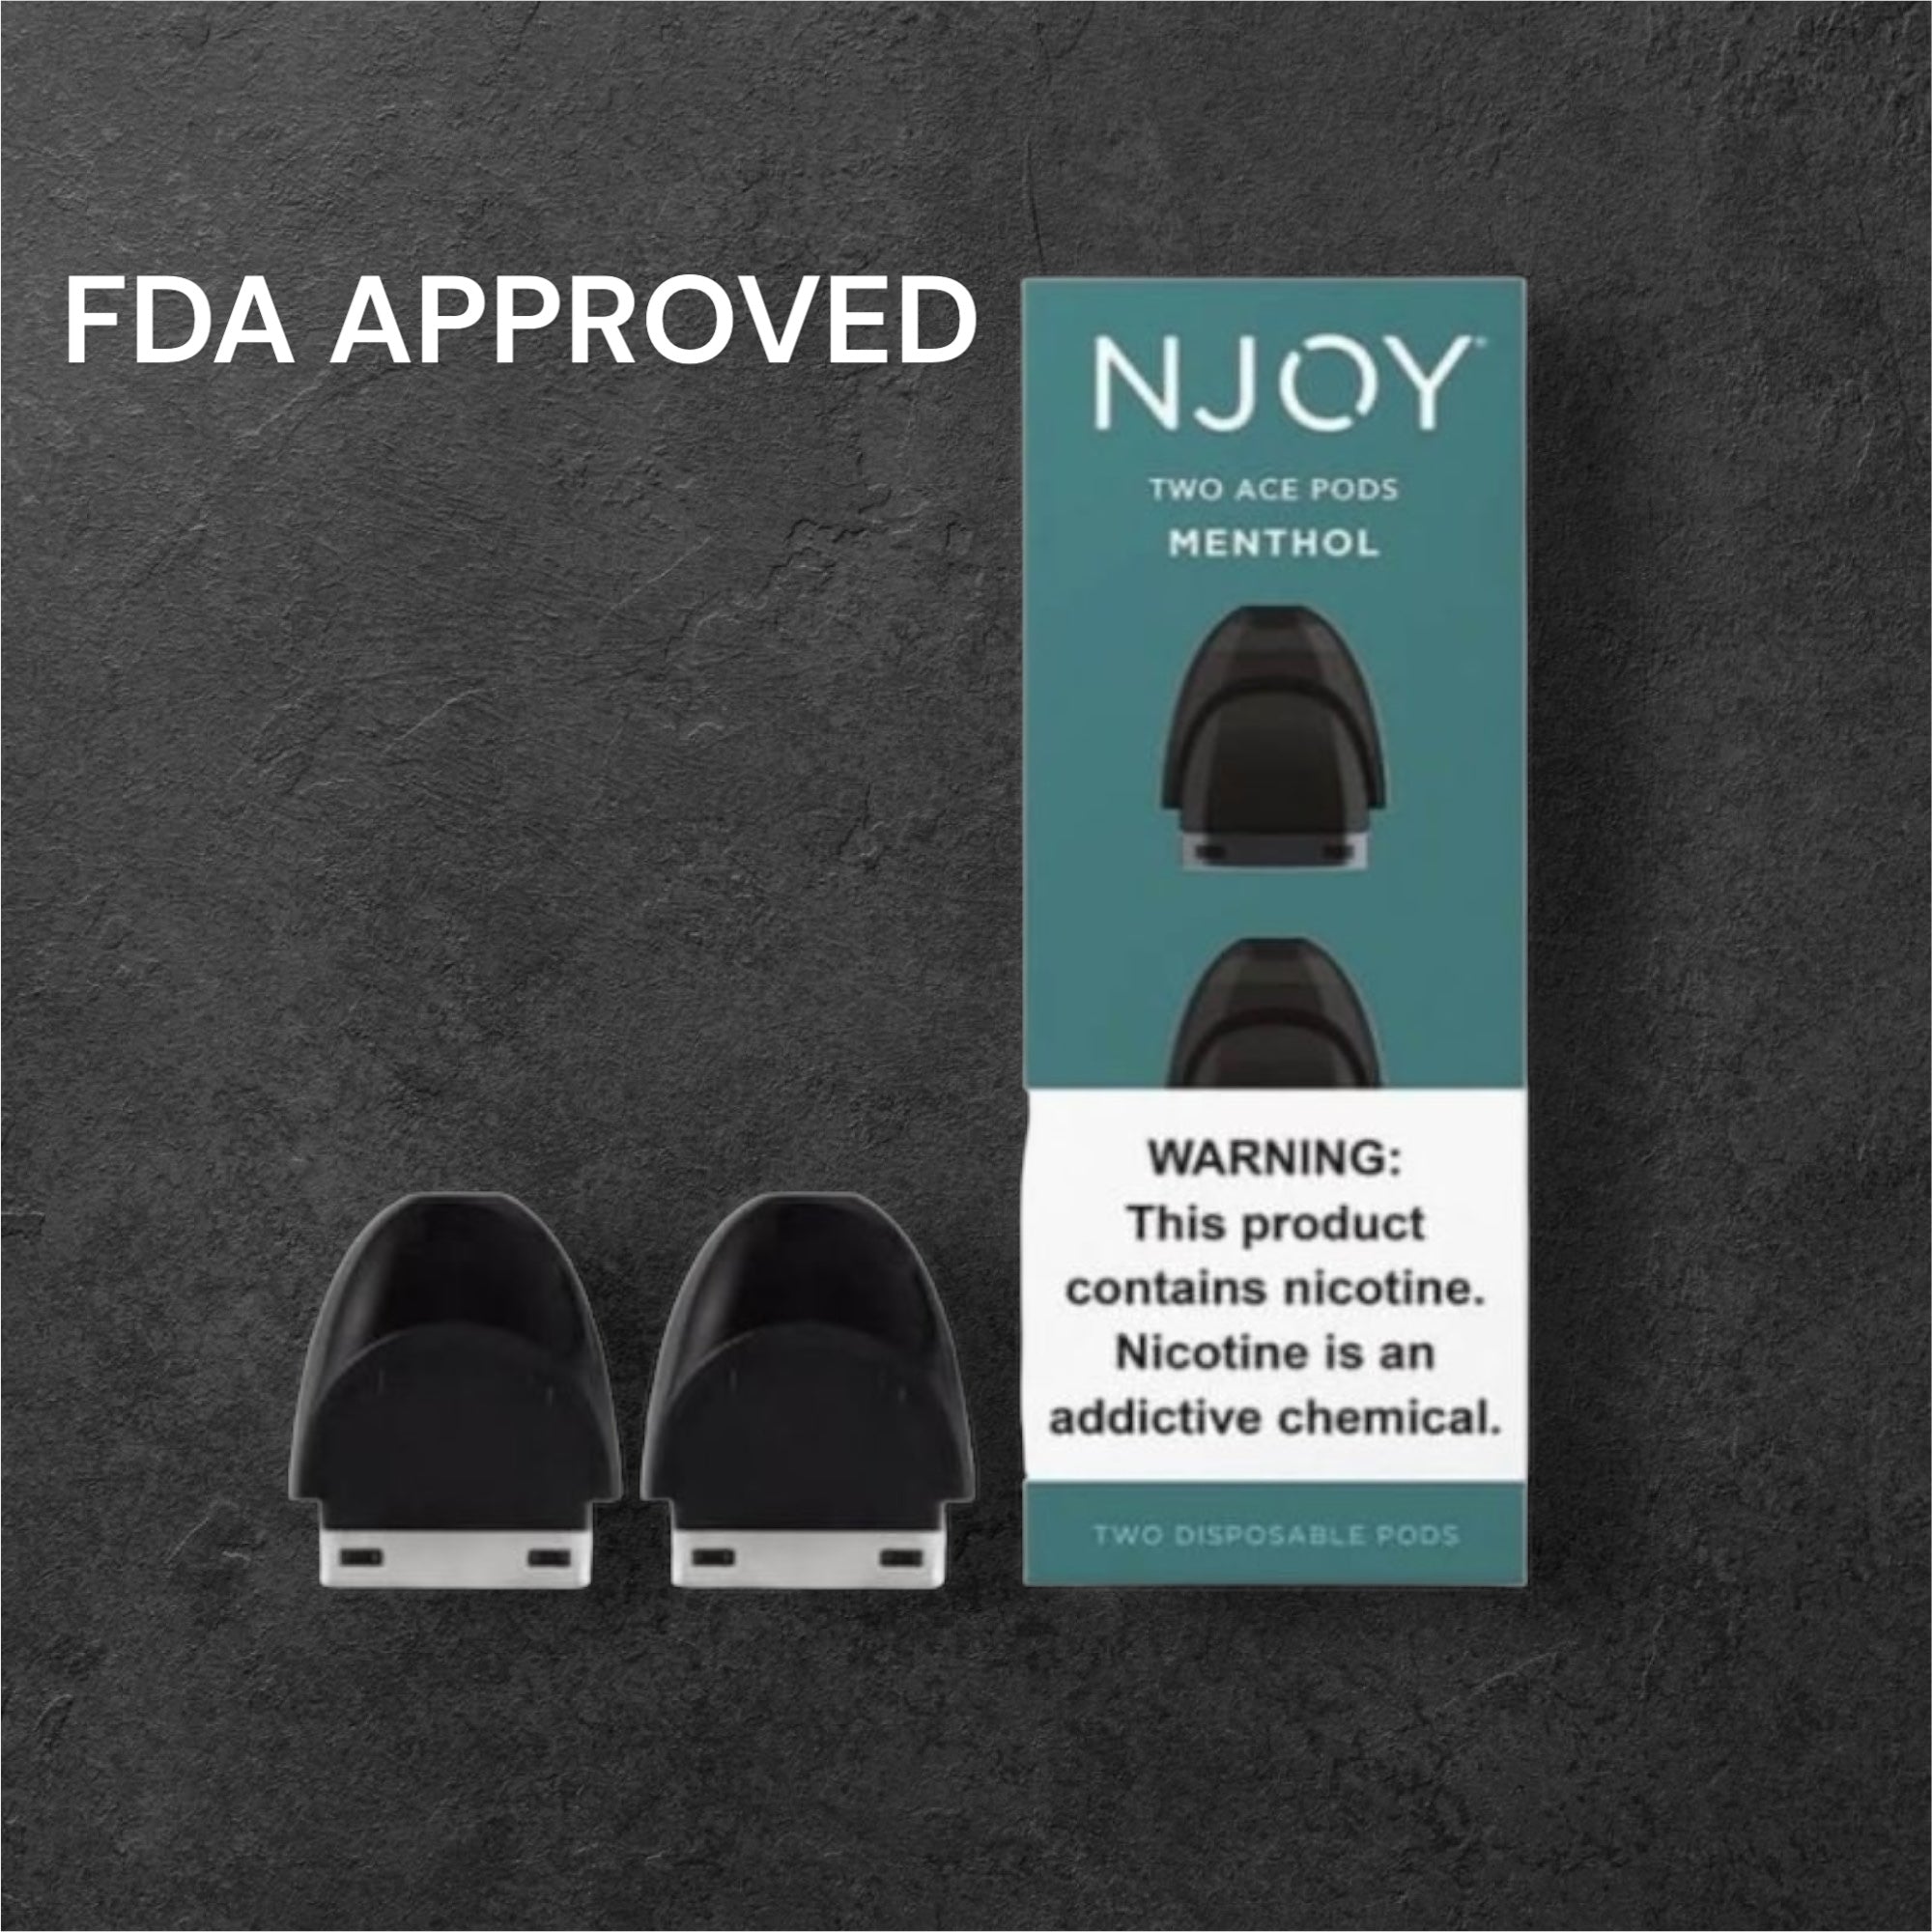 Njoy Ace 2.4% Menthol Pods - FDA APPROVED Vaporizer Accessories